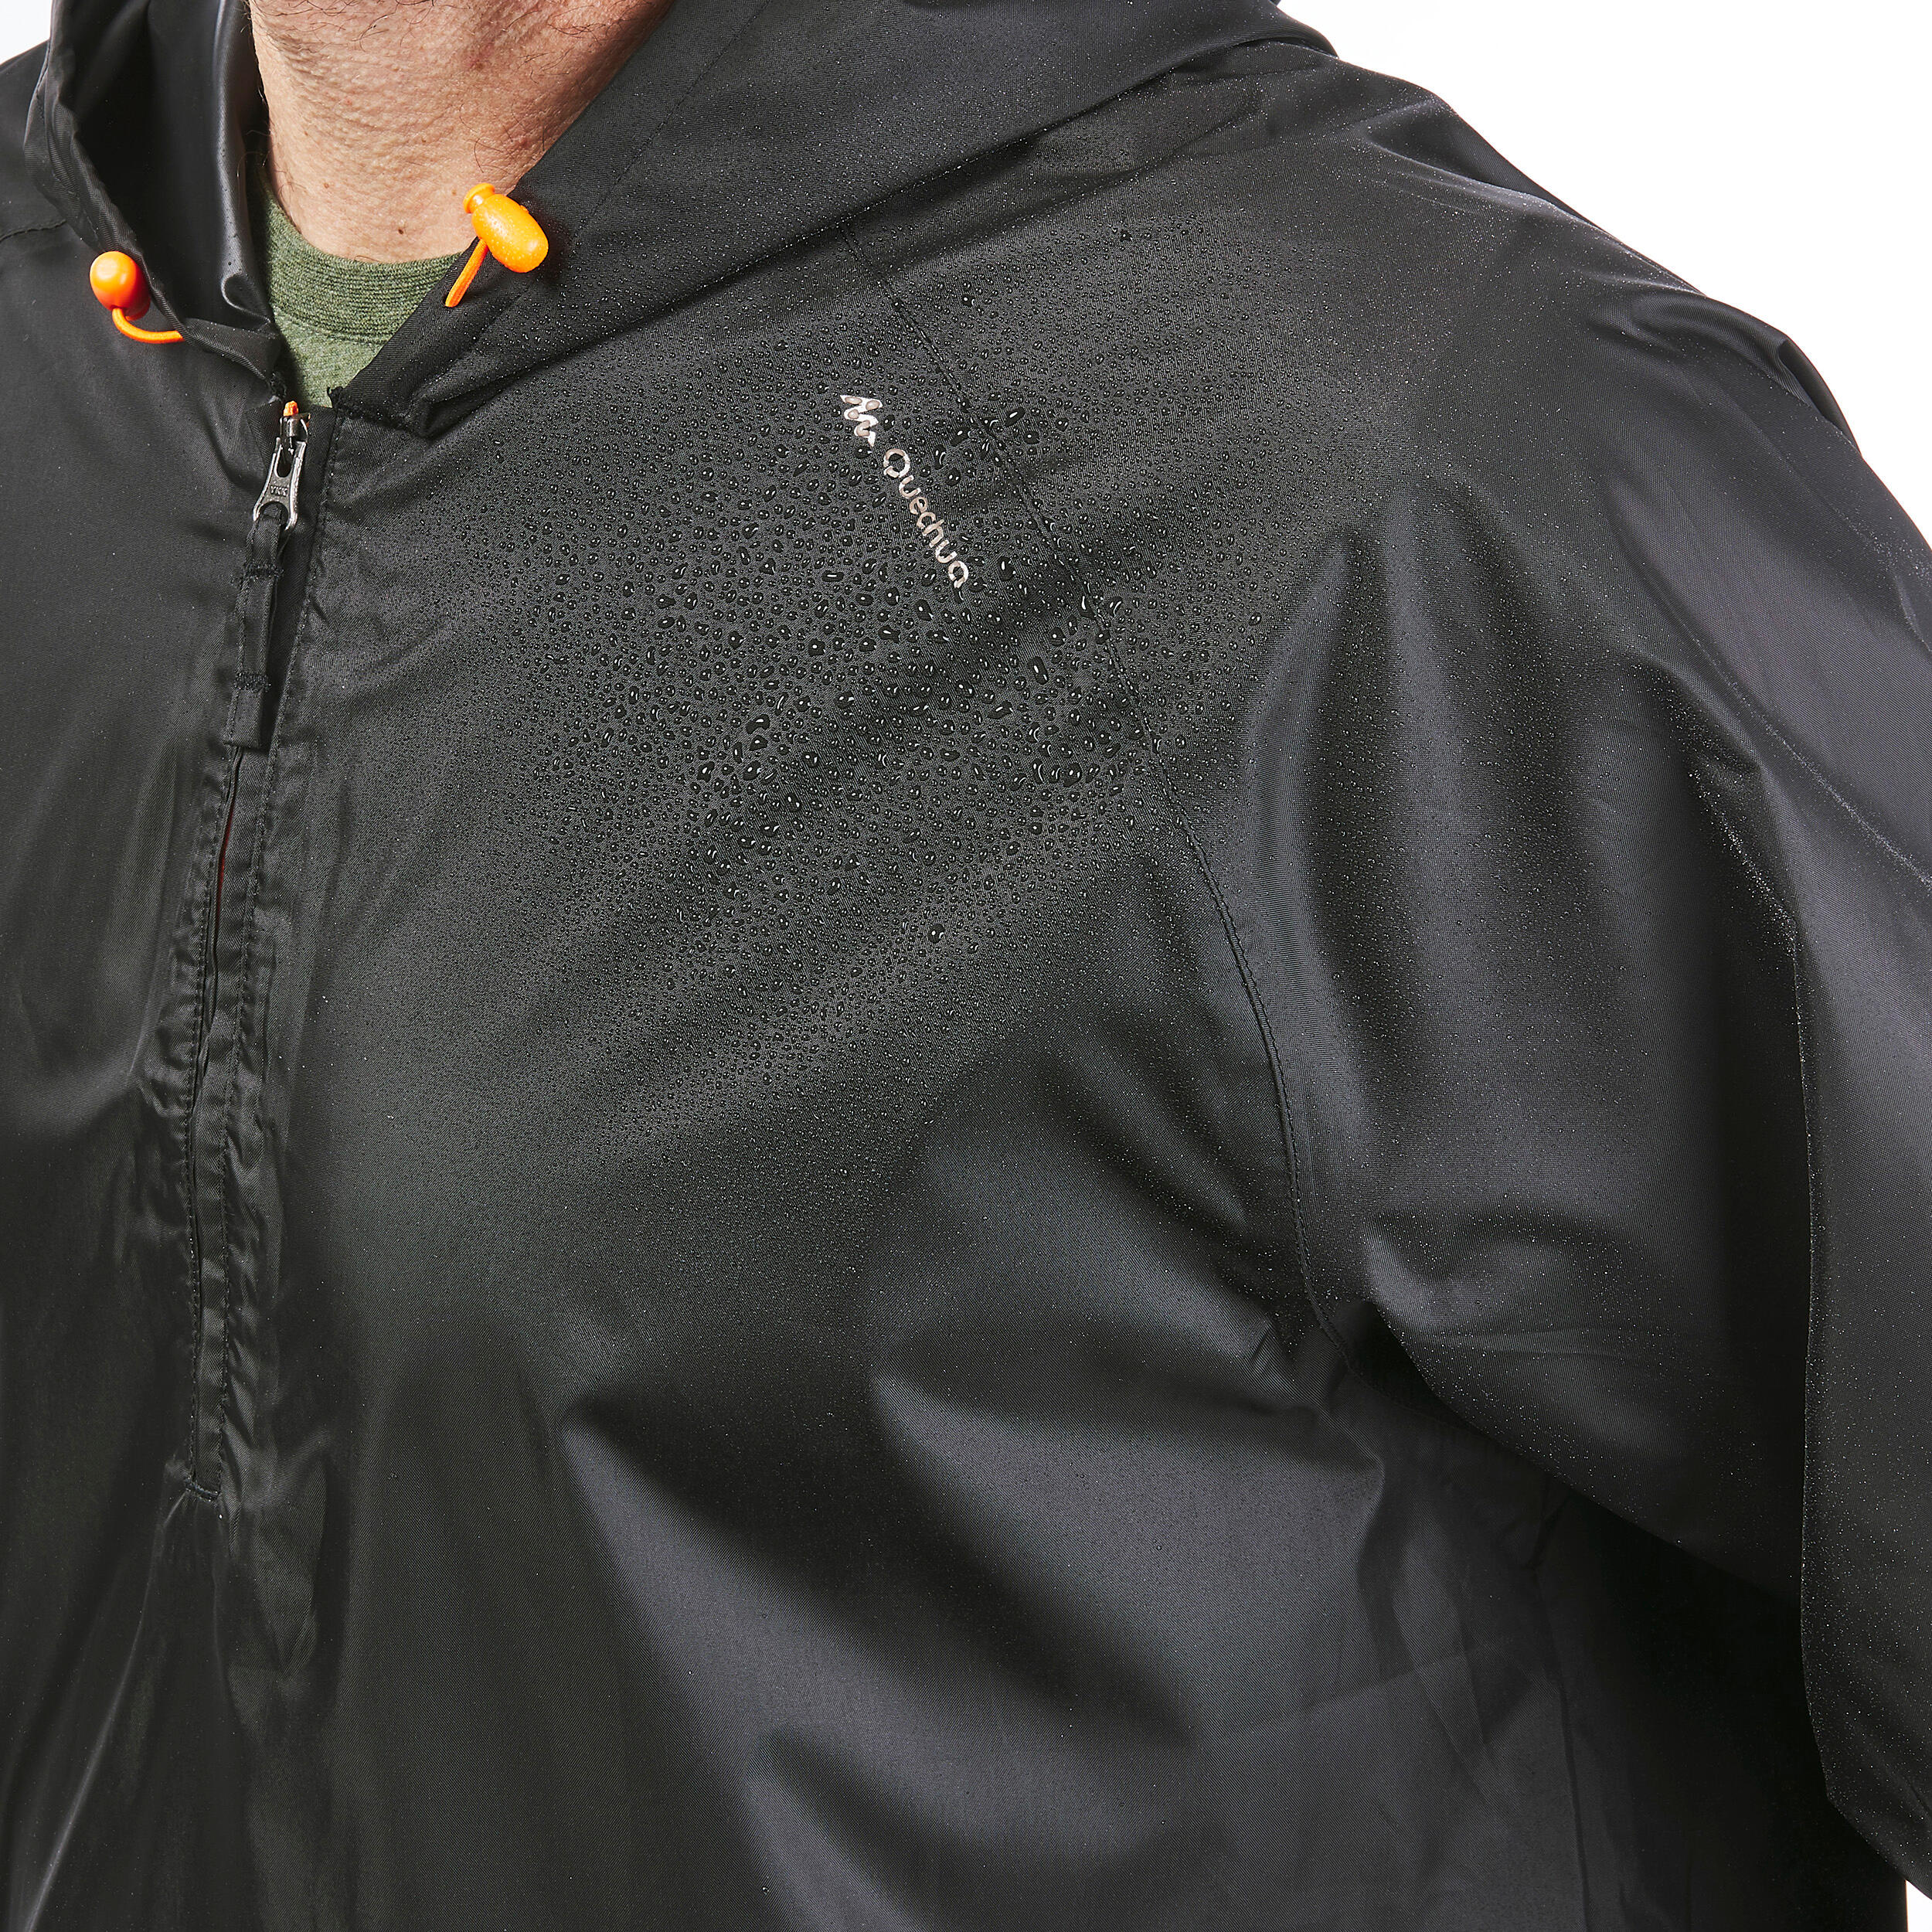 Windbreaker jacket - softshell - warm - MT500 - men's FORCLAZ | Decathlon